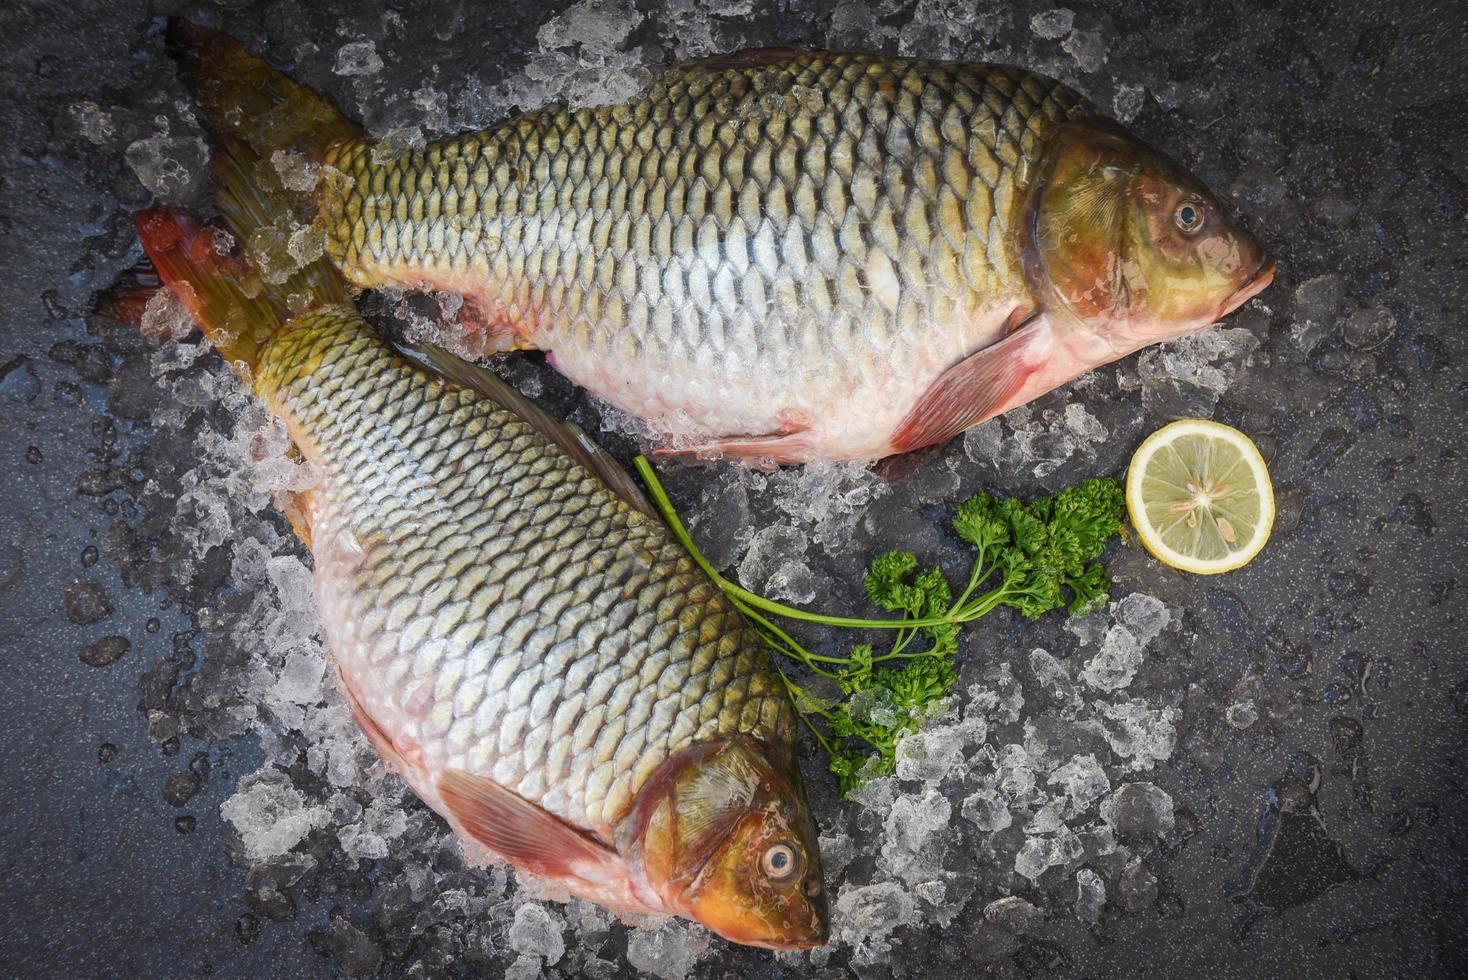 Carp fish, Fresh raw fish on ice for cooked food with parsley lemon and dark background, common carp freshwater fish market photo